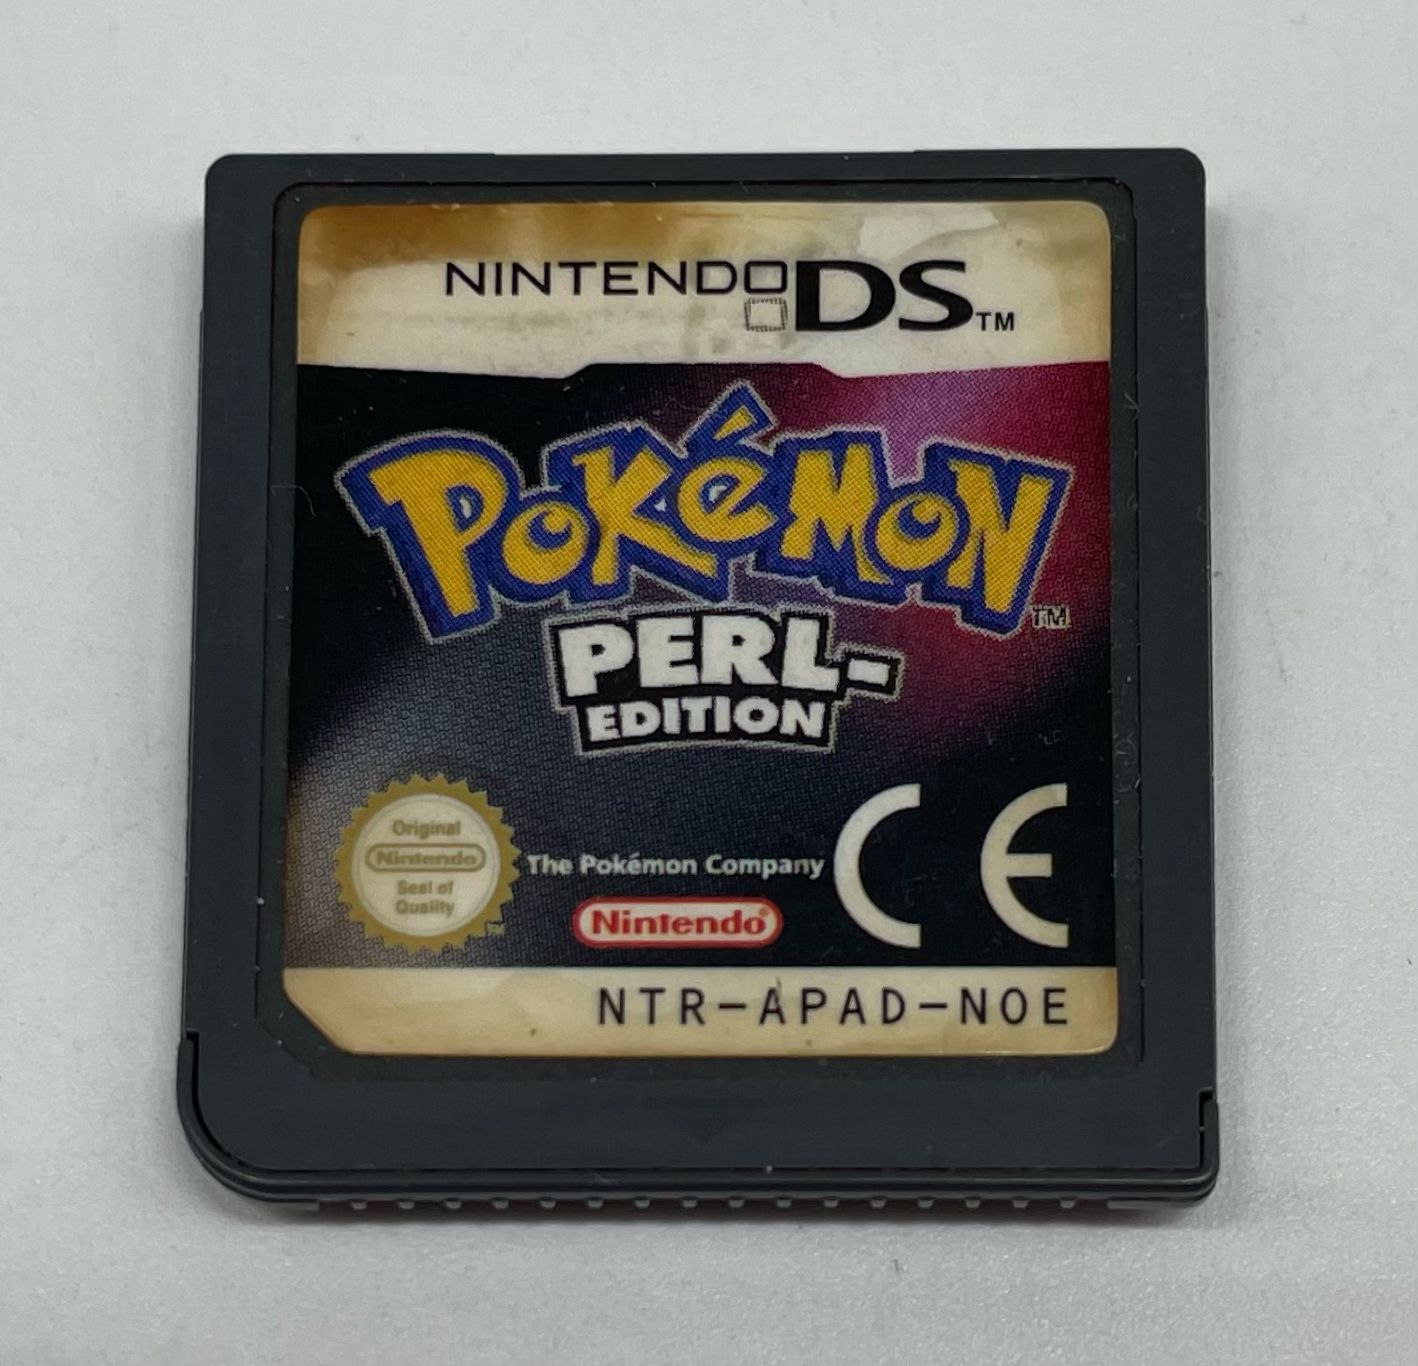 Pokemon Perl Edition DS